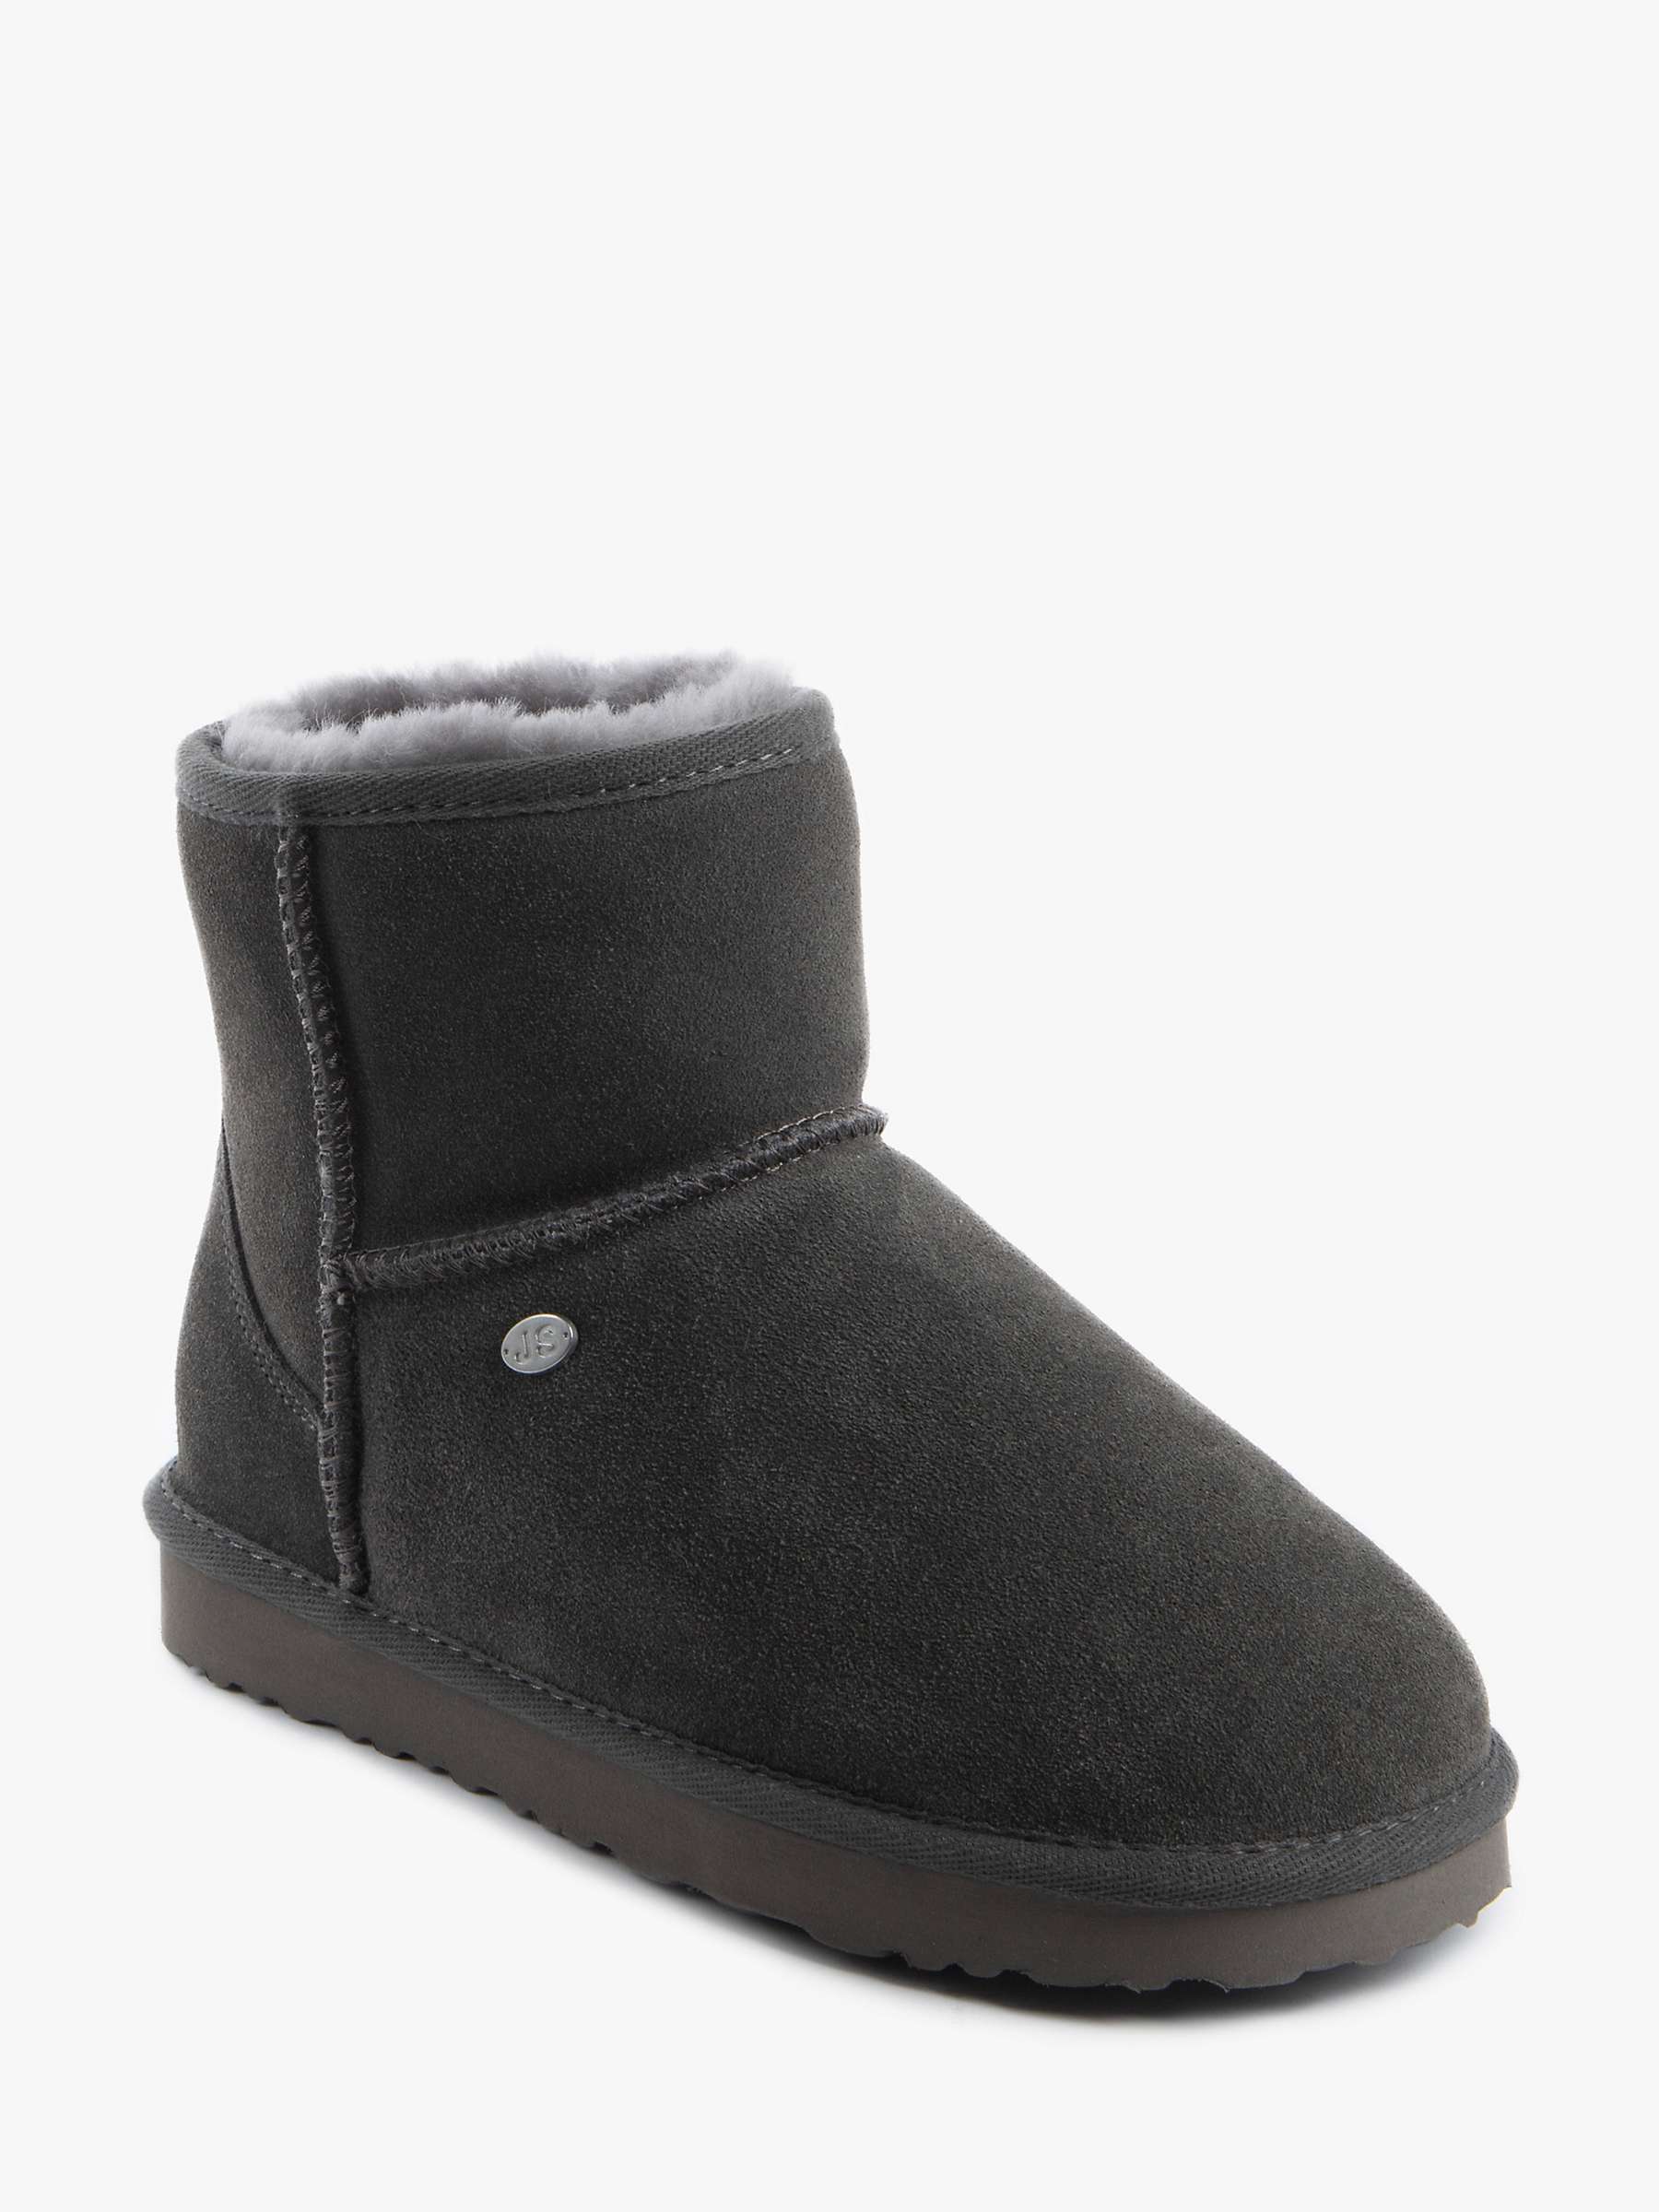 Buy Just Sheepskin Mini Classic Boots, Granite Online at johnlewis.com